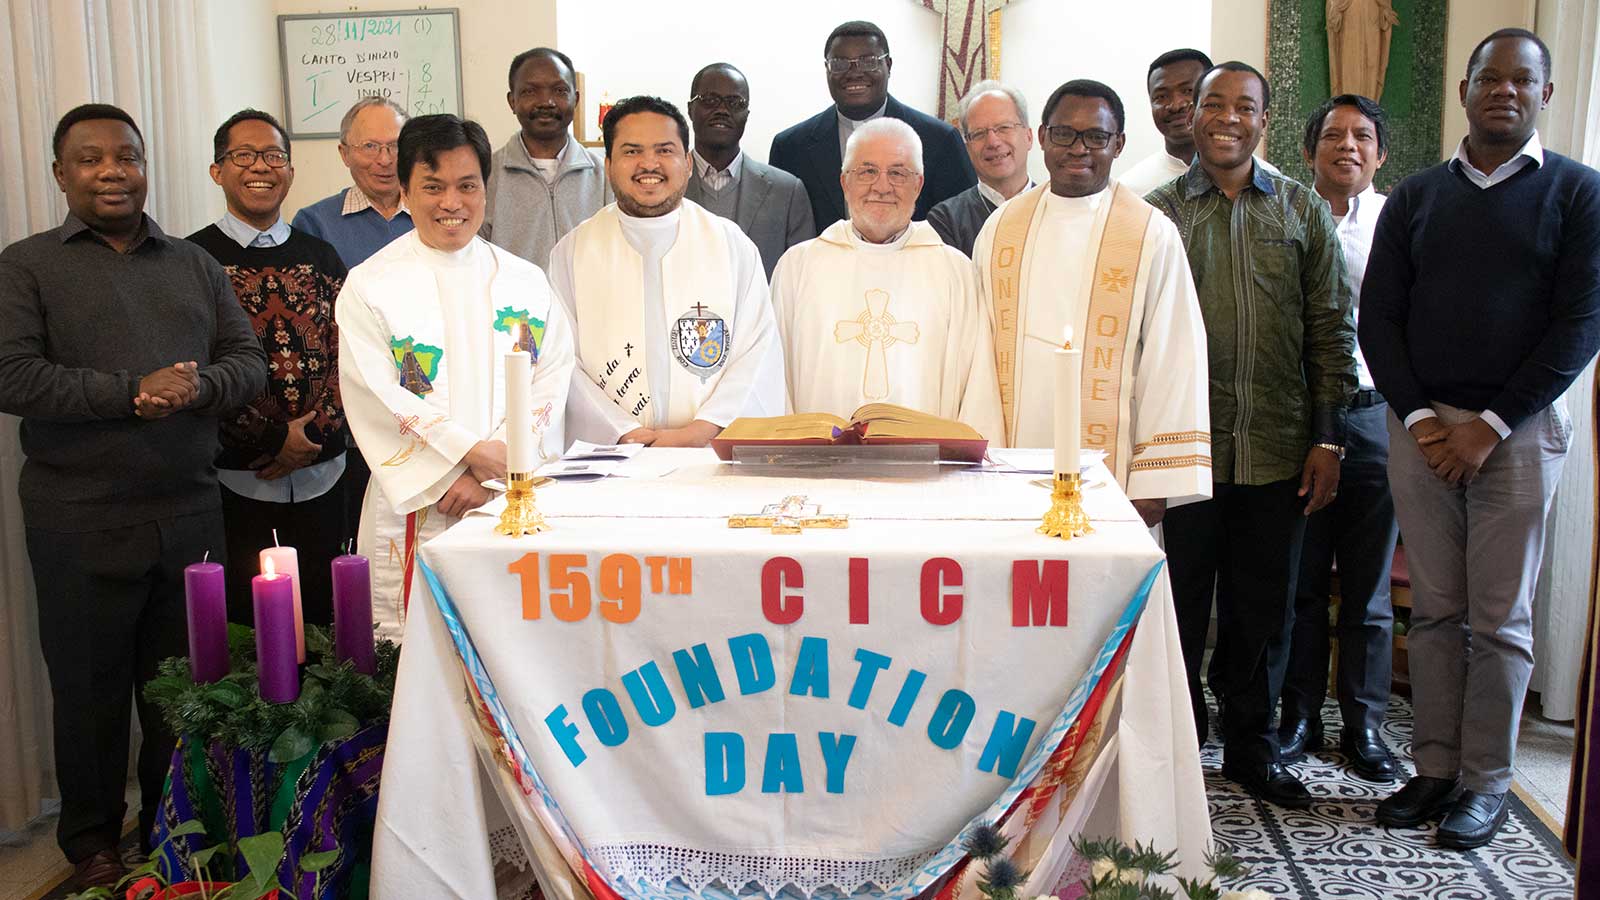 CICM Foundation Day celebration - November 28, 2021